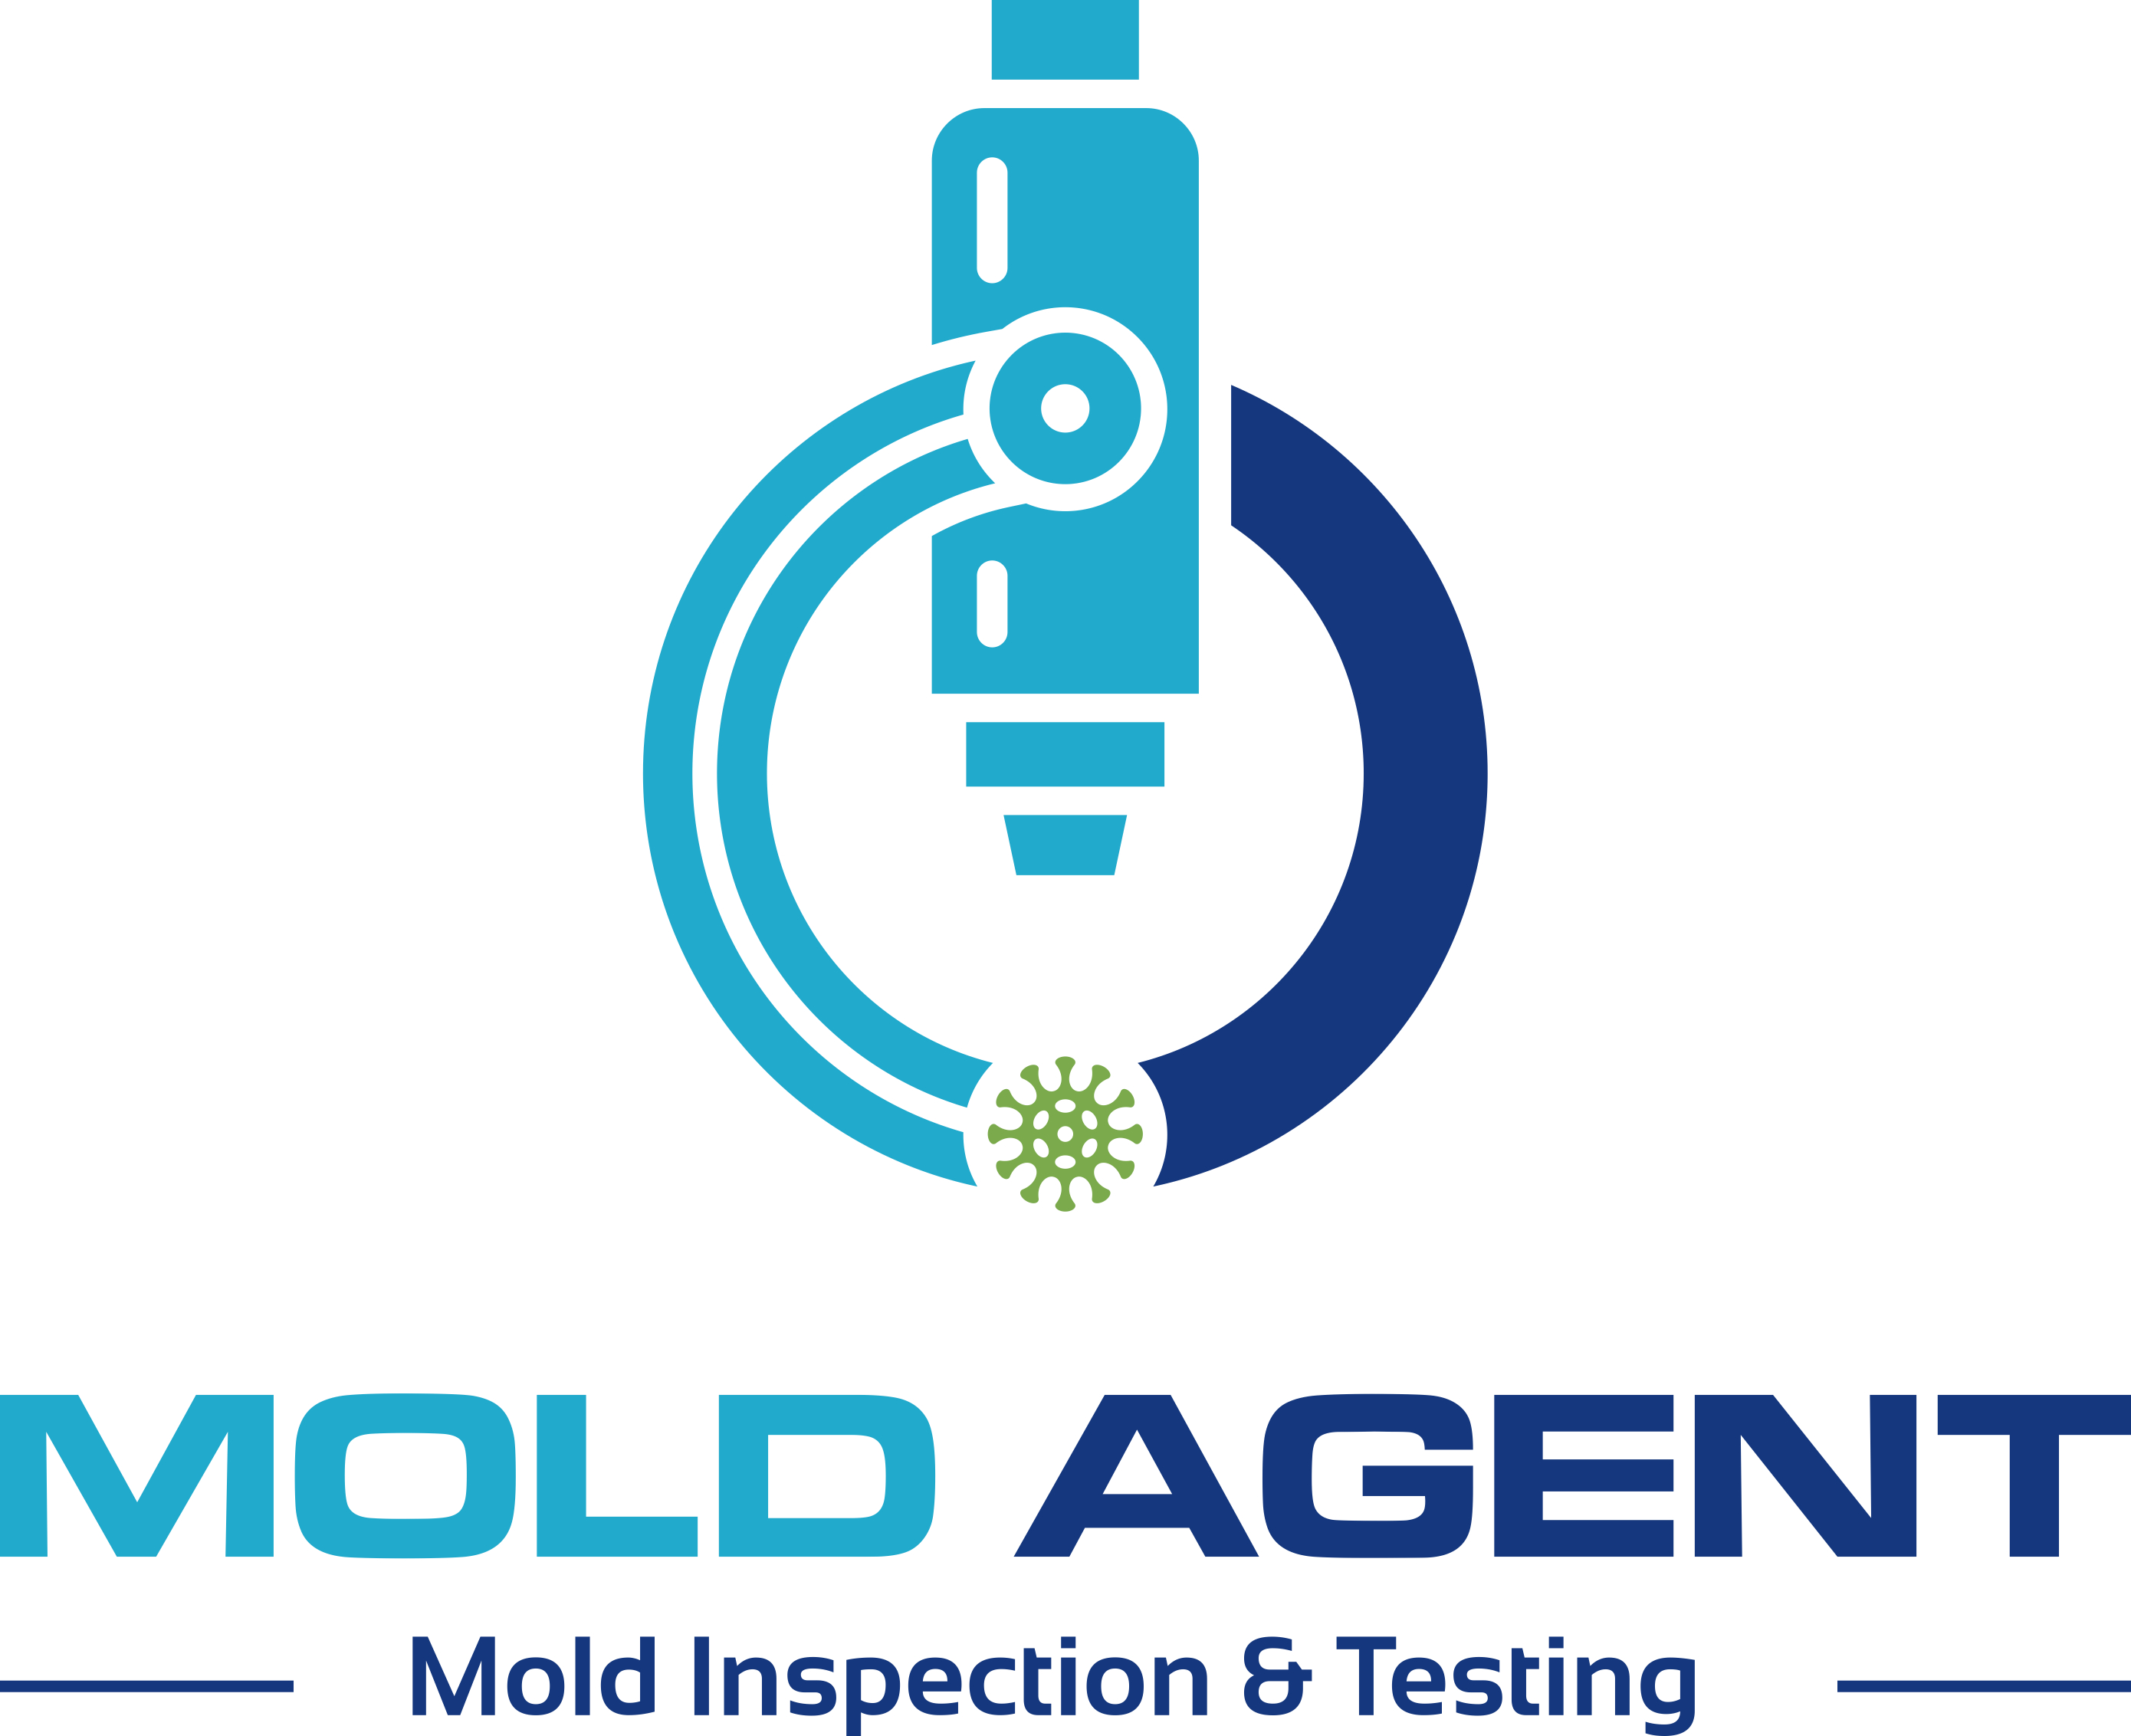 Mold Agent Inc